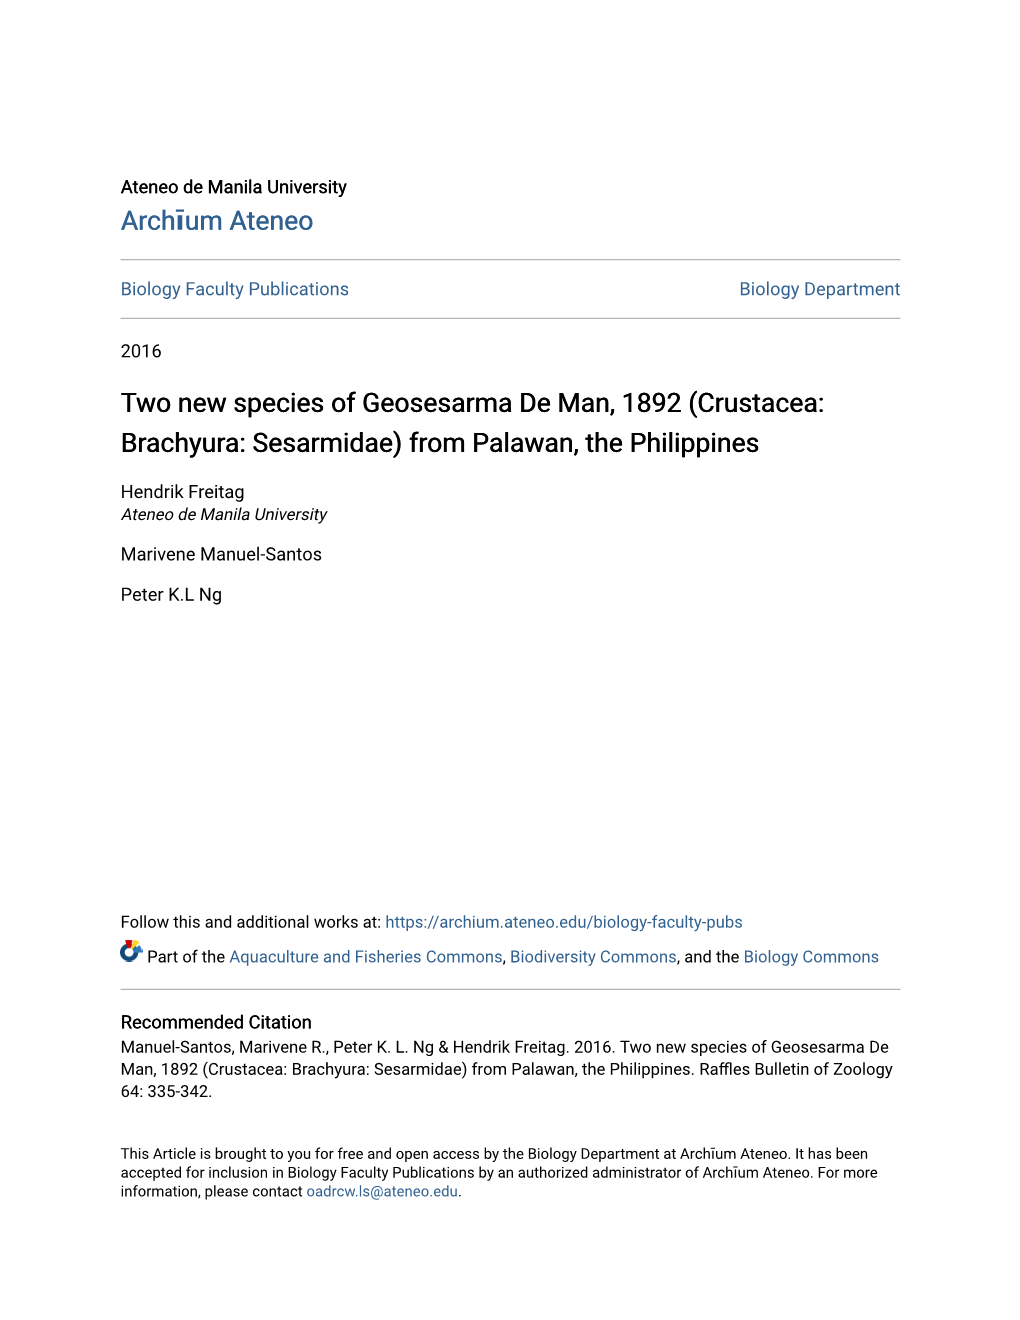 Two New Species of Geosesarma De Man, 1892 (Crustacea: Brachyura: Sesarmidae) from Palawan, the Philippines